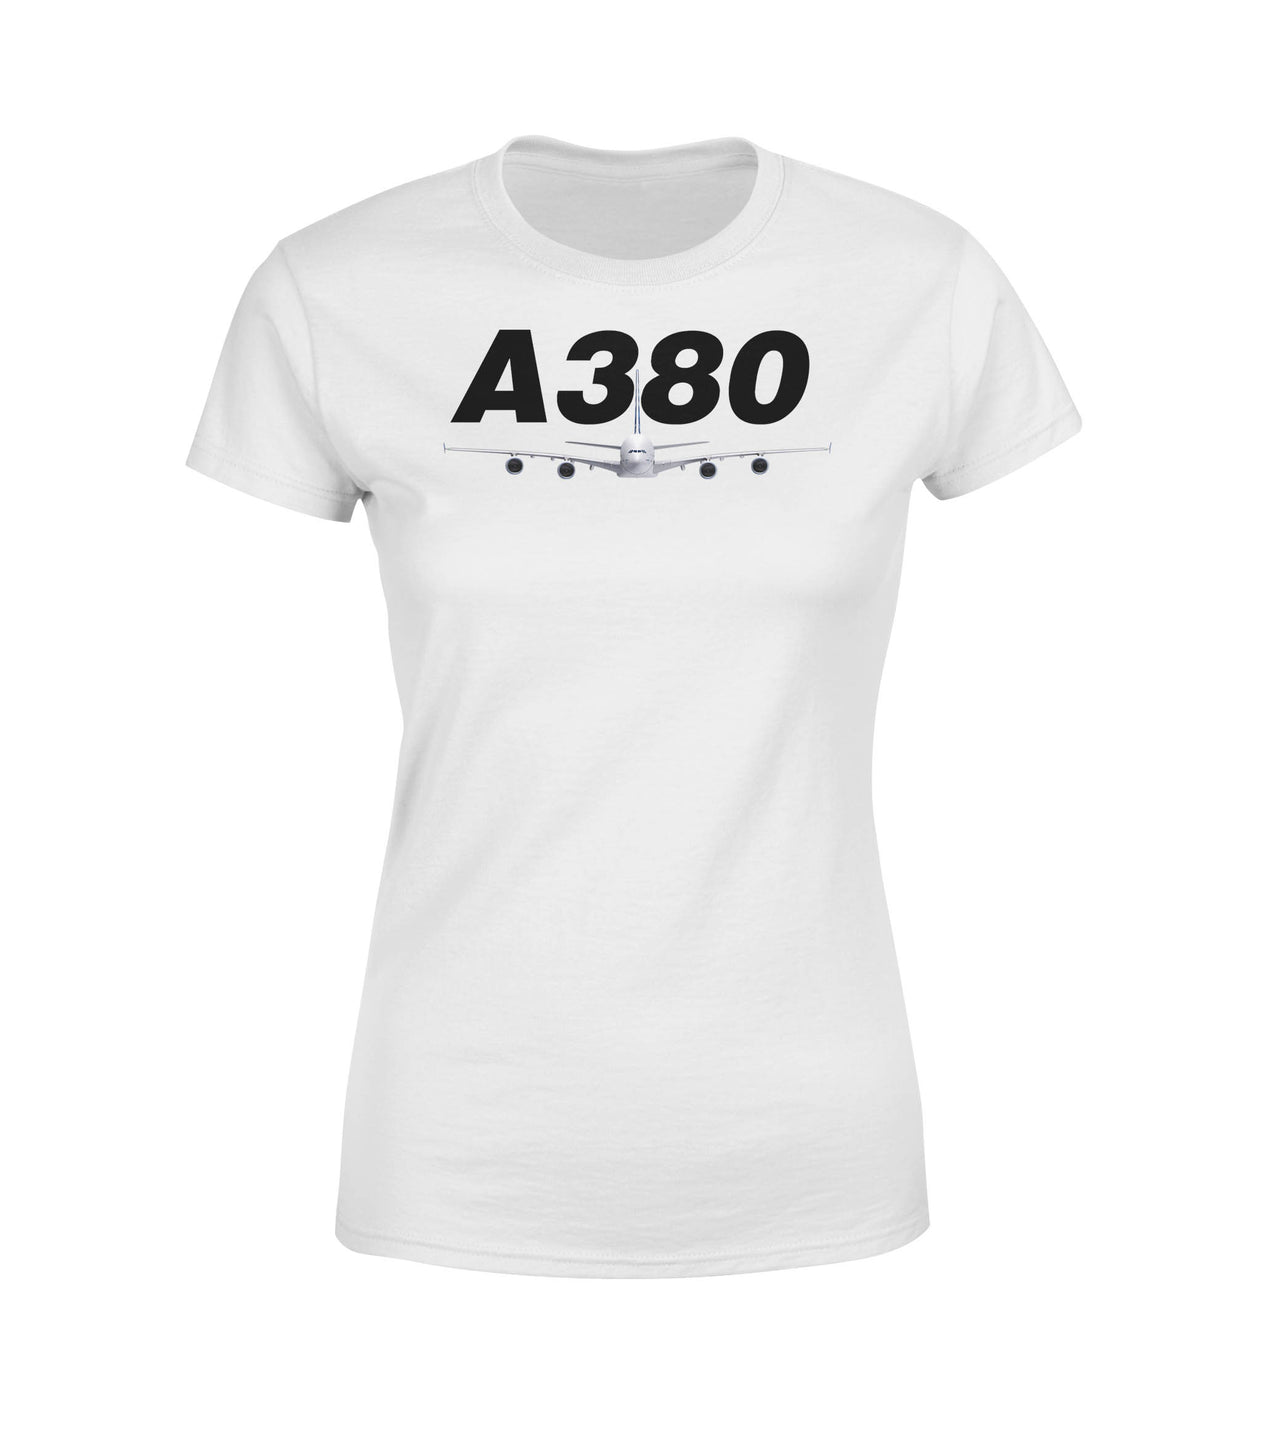 Super Airbus A380 Designed Women T-Shirts